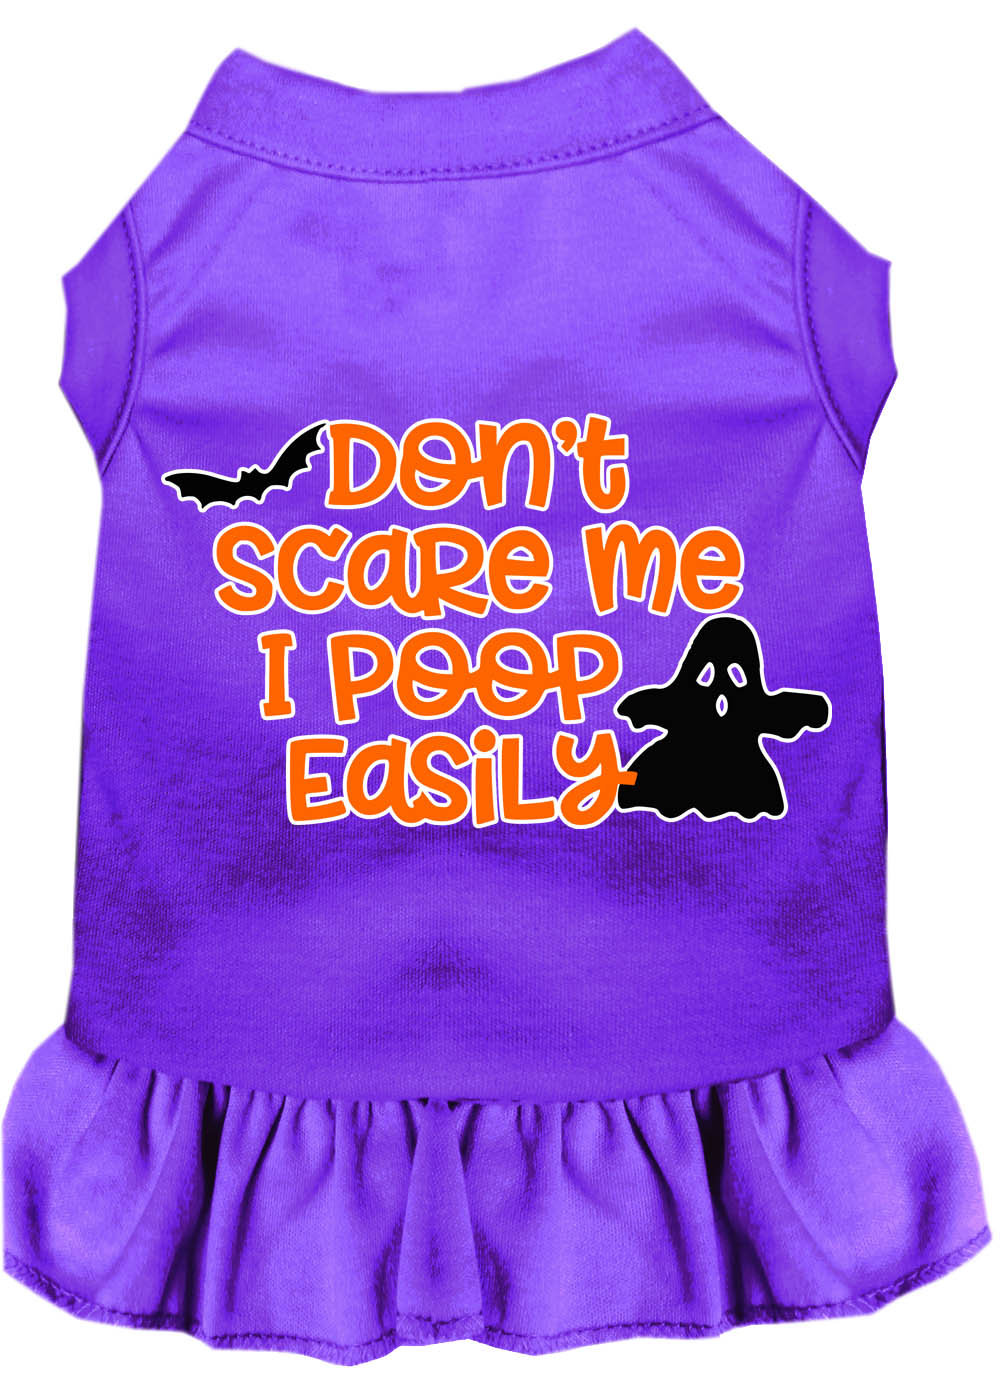 Don't Scare Me, Poops Easily Screen Print Dog Dress Purple Lg